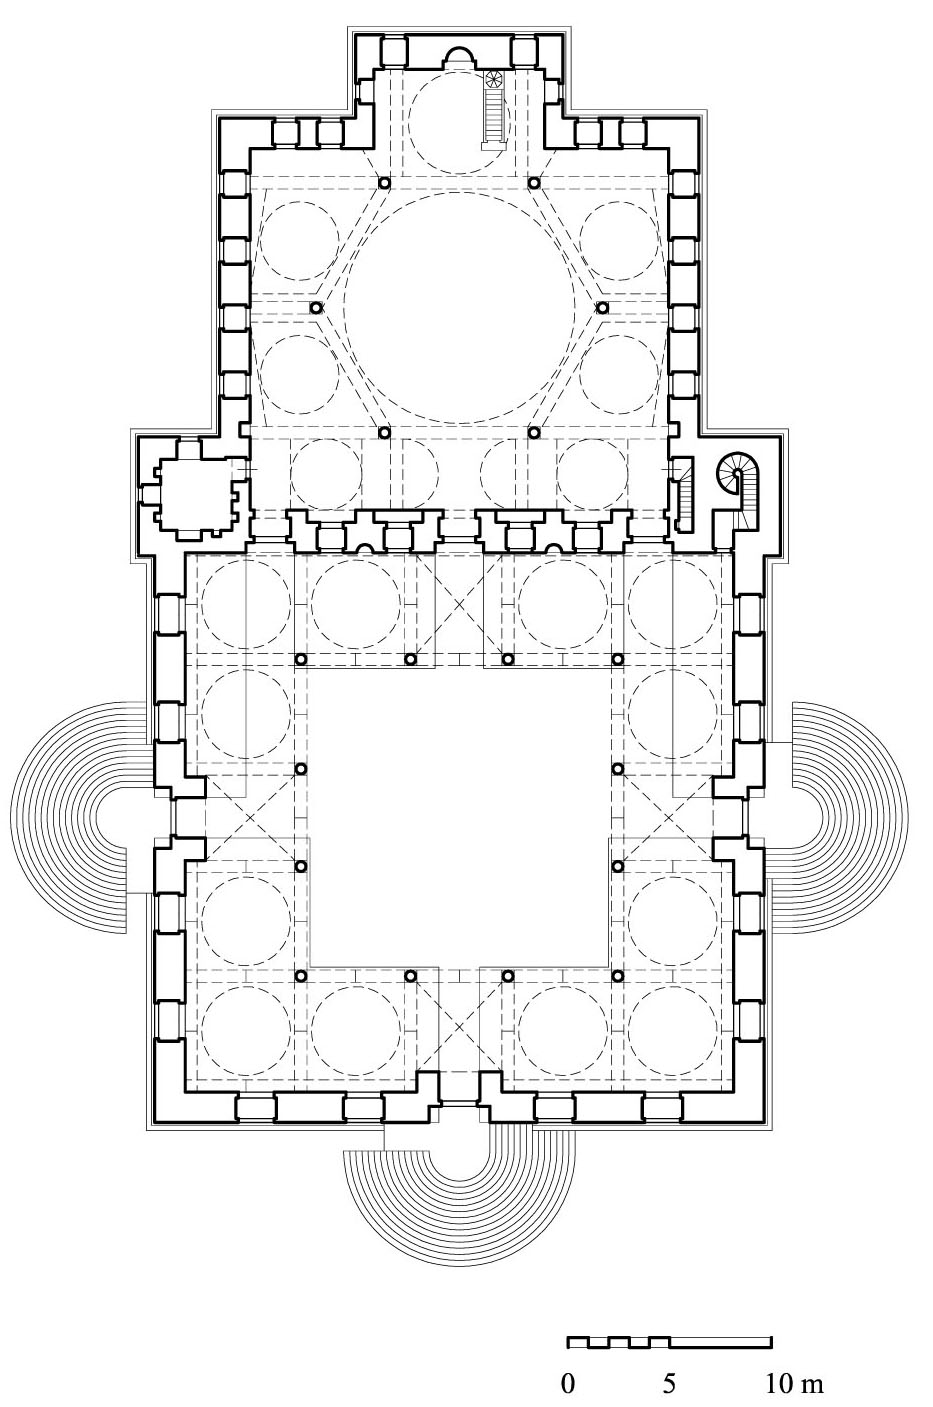 Floor plan of Malika Safiyya Mosque